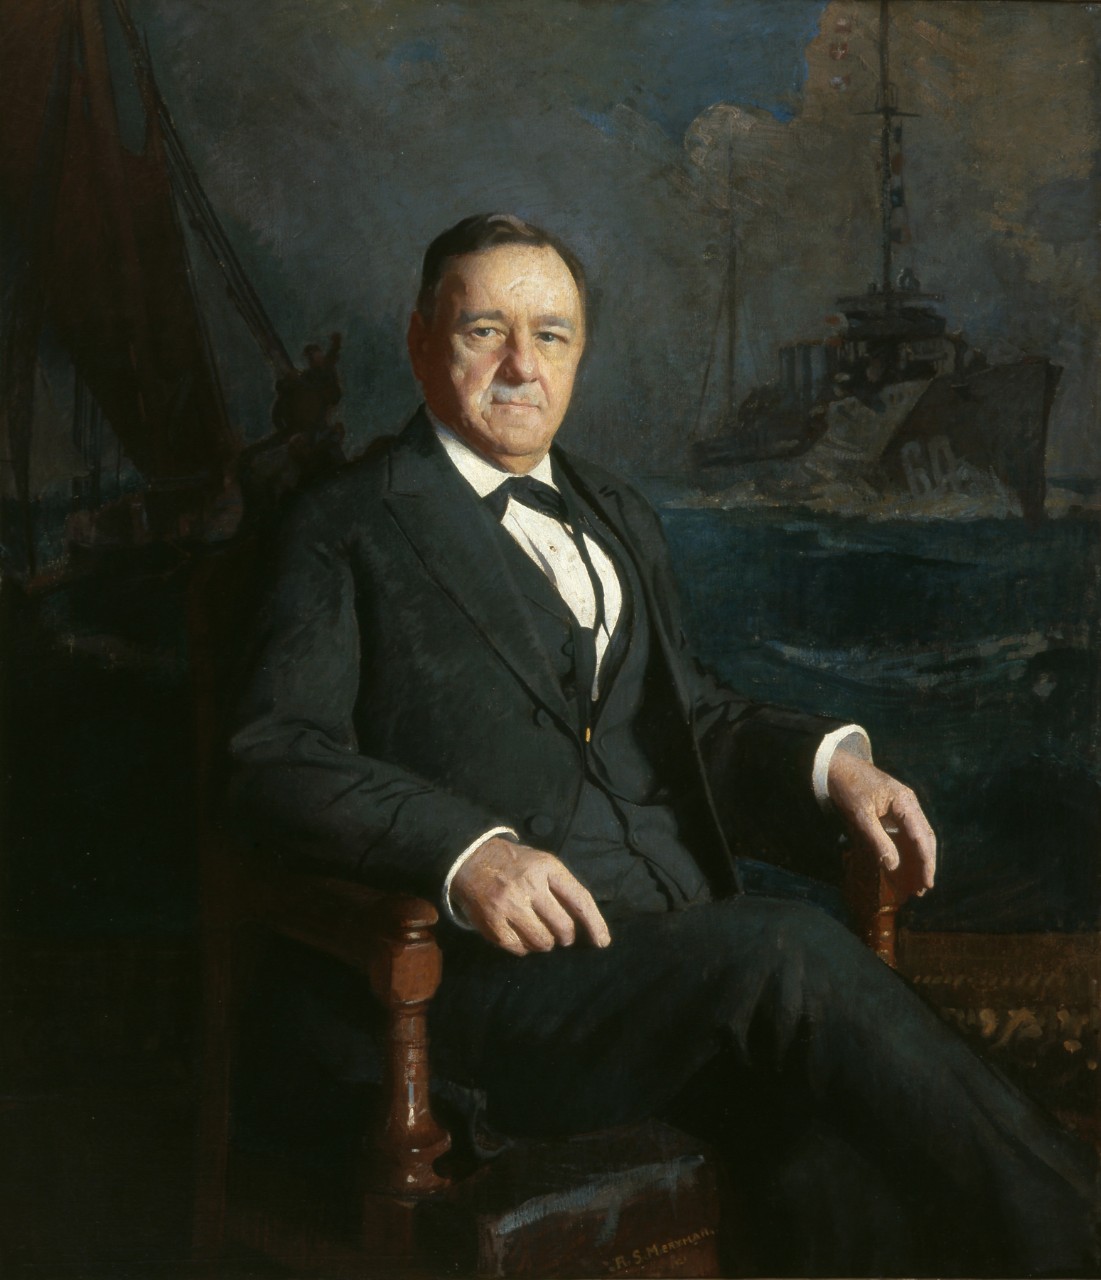 Secretary of the Navy Josephus Daniels